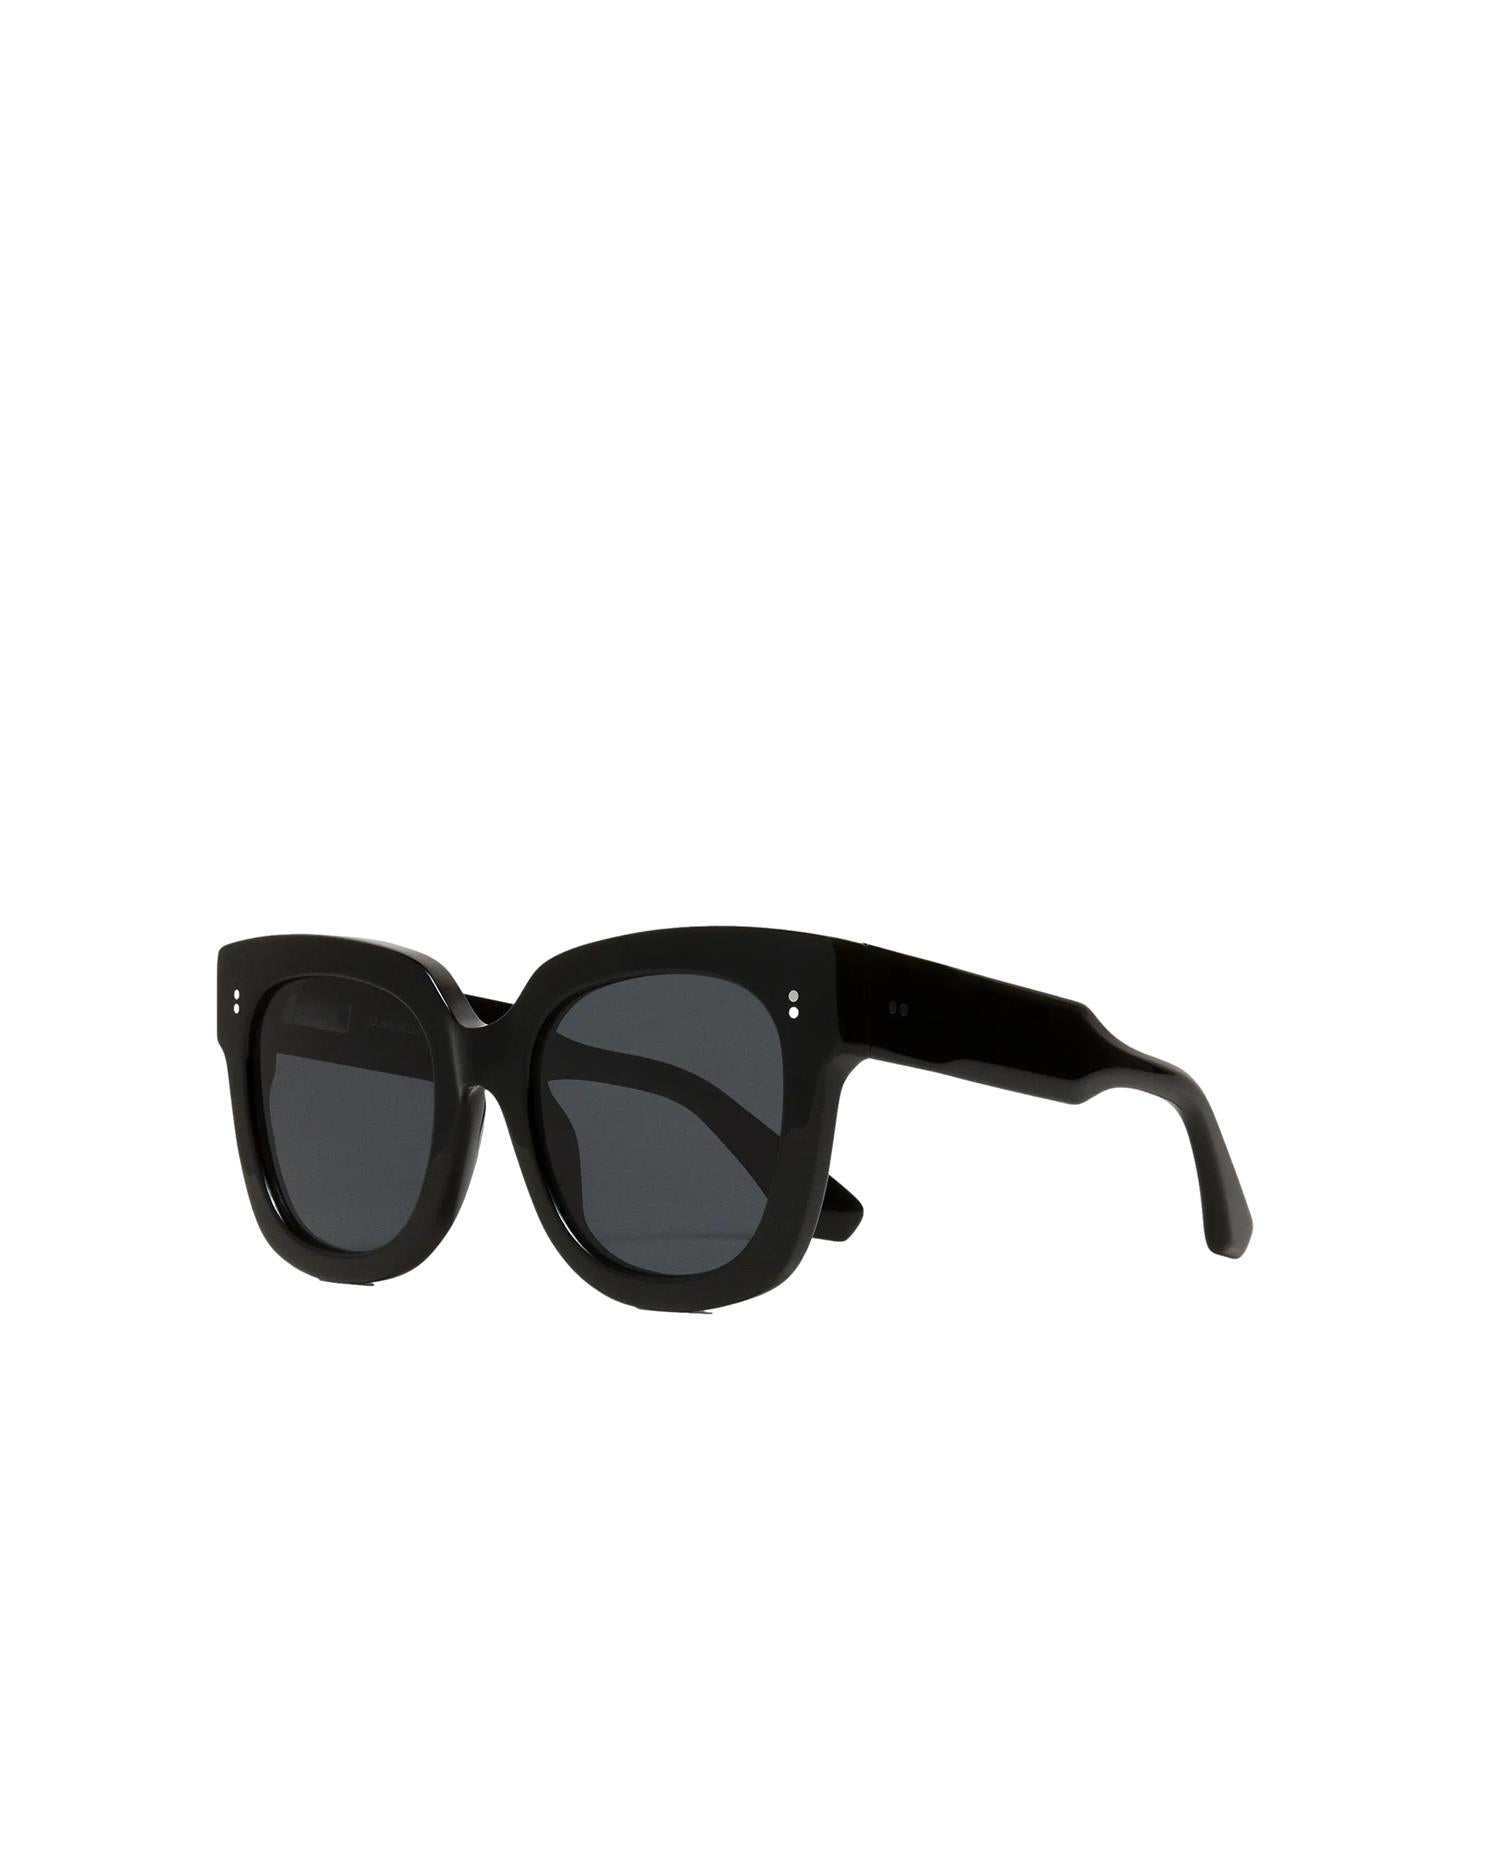 Chimi Eyewear 08 Black Solbriller Sort - modostore.no